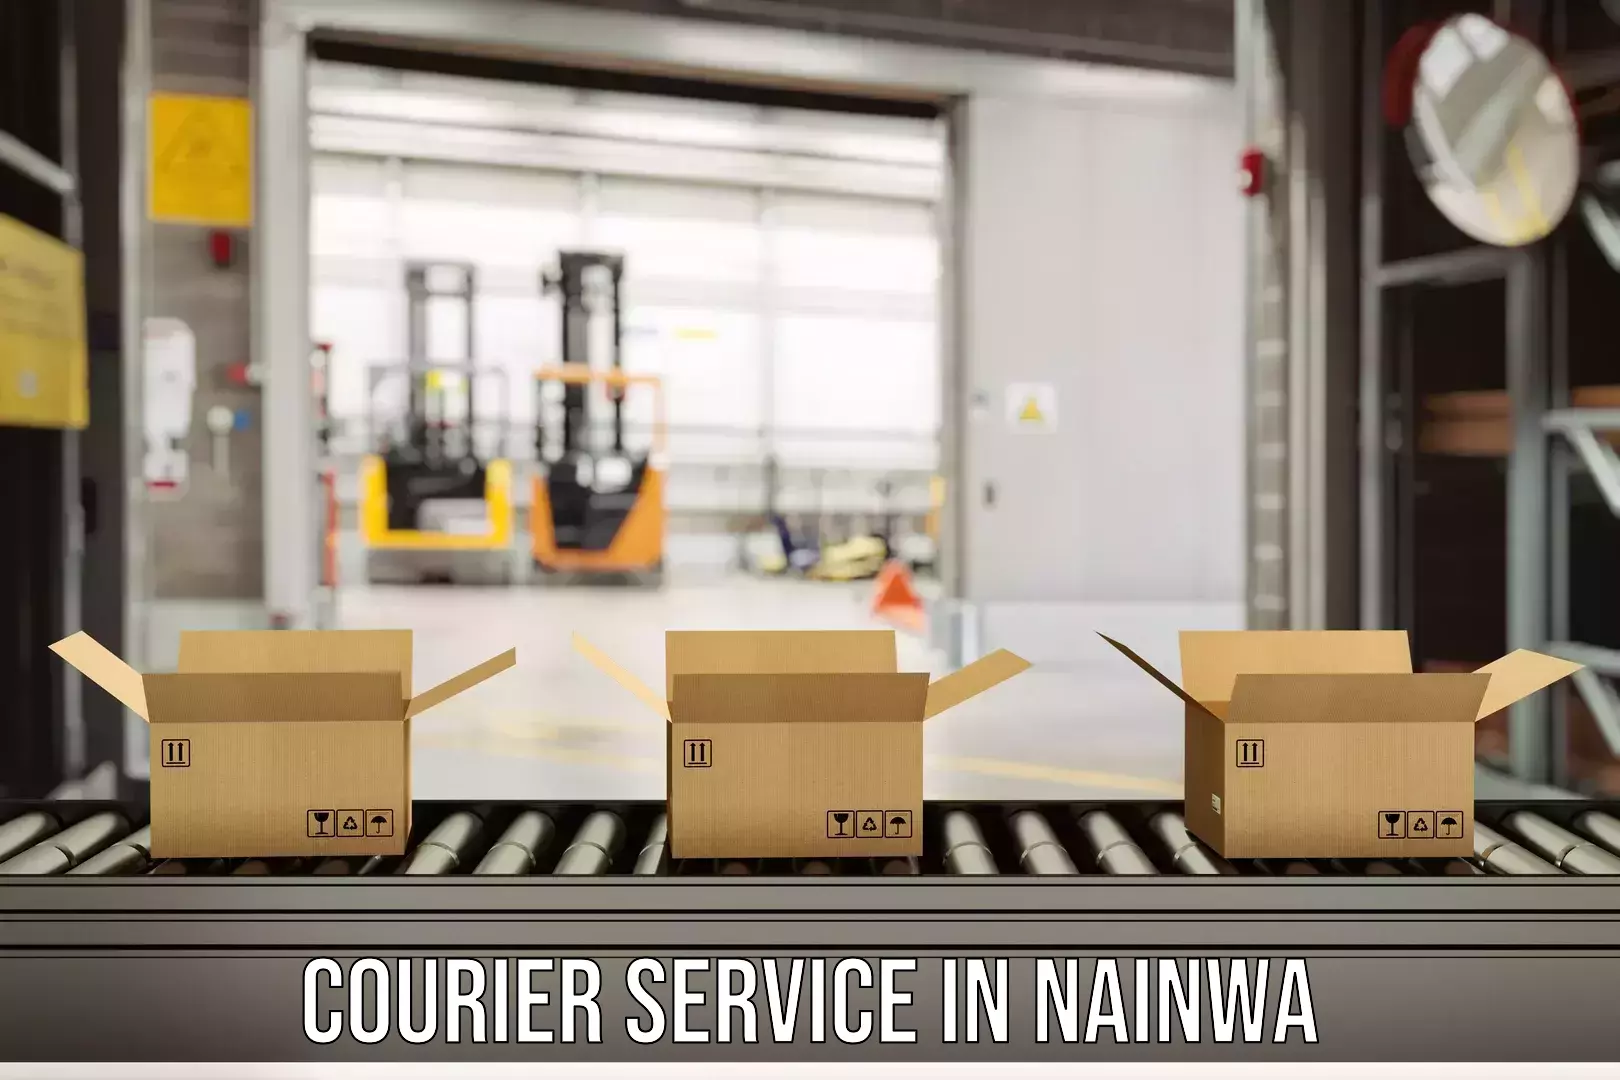 Customer-focused courier in Nainwa